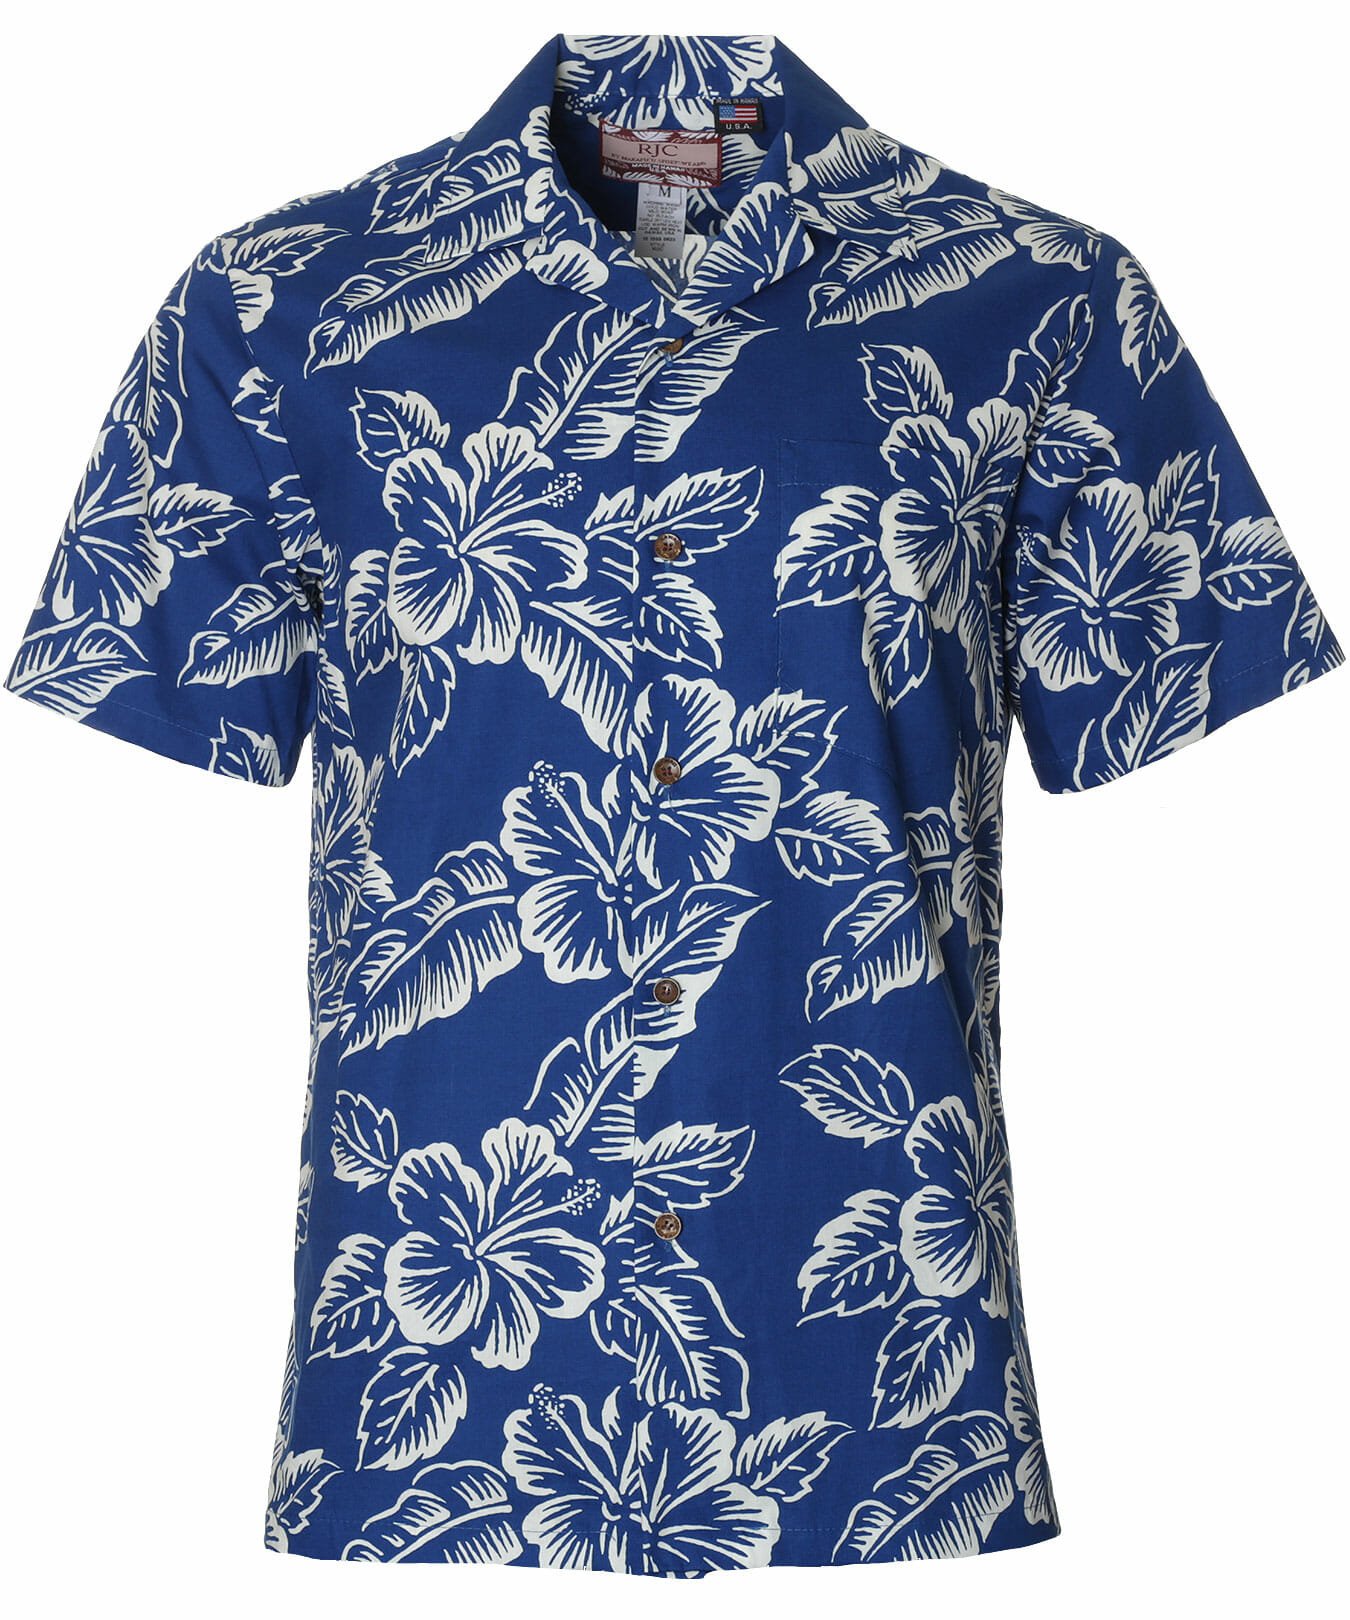 Palama Men's Aloha Shirts Navy